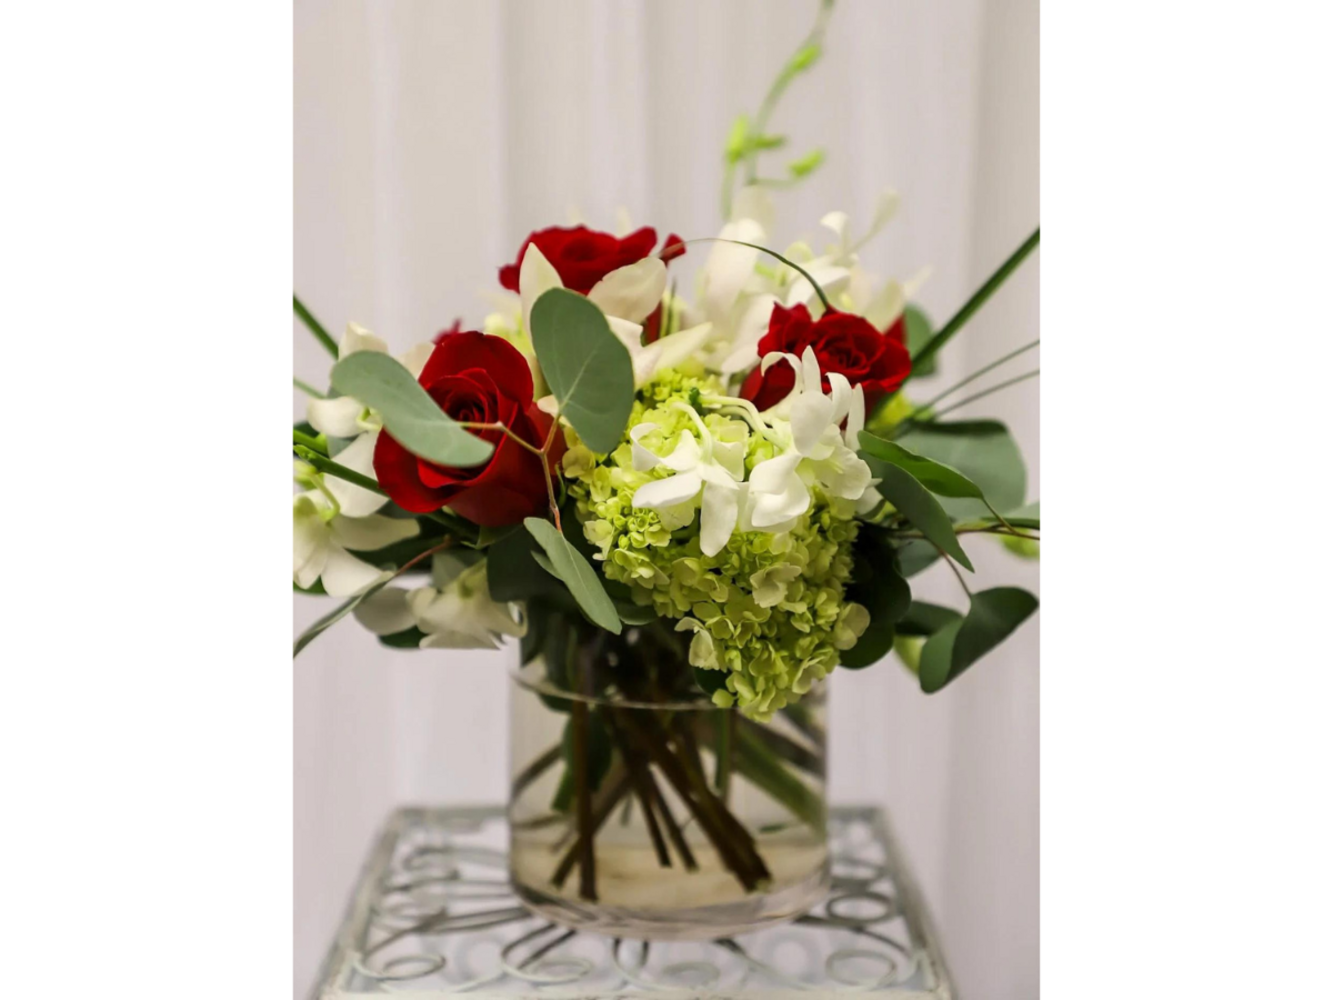 Ten Pennies Florist & Flower Delivery